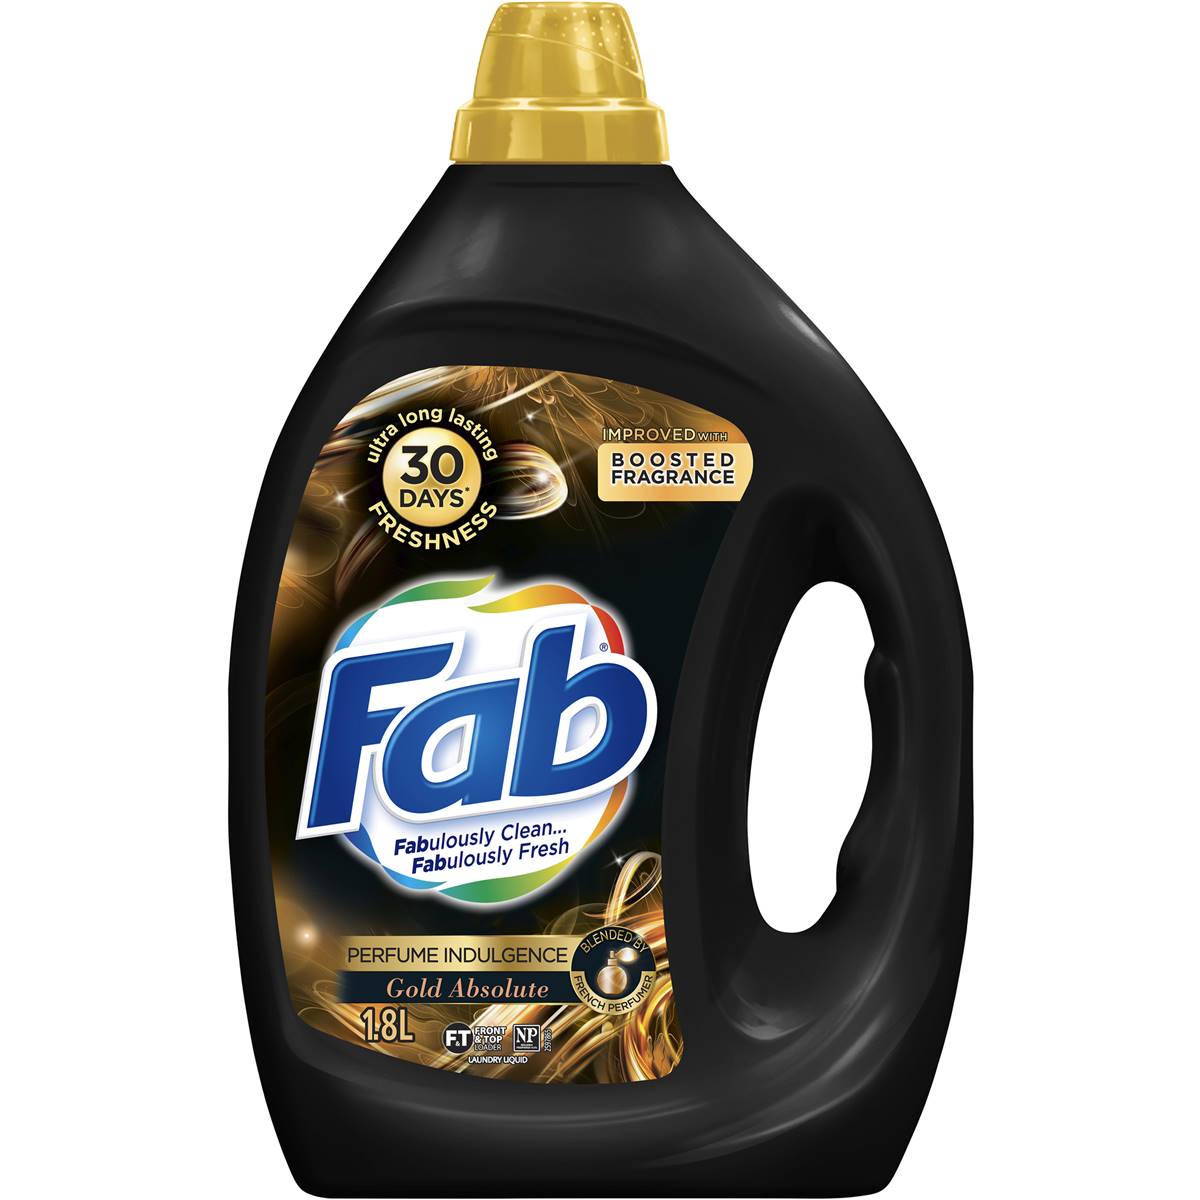 Fab Perfume Indulgence Gold Laundry Detergent Liquid 1.8l